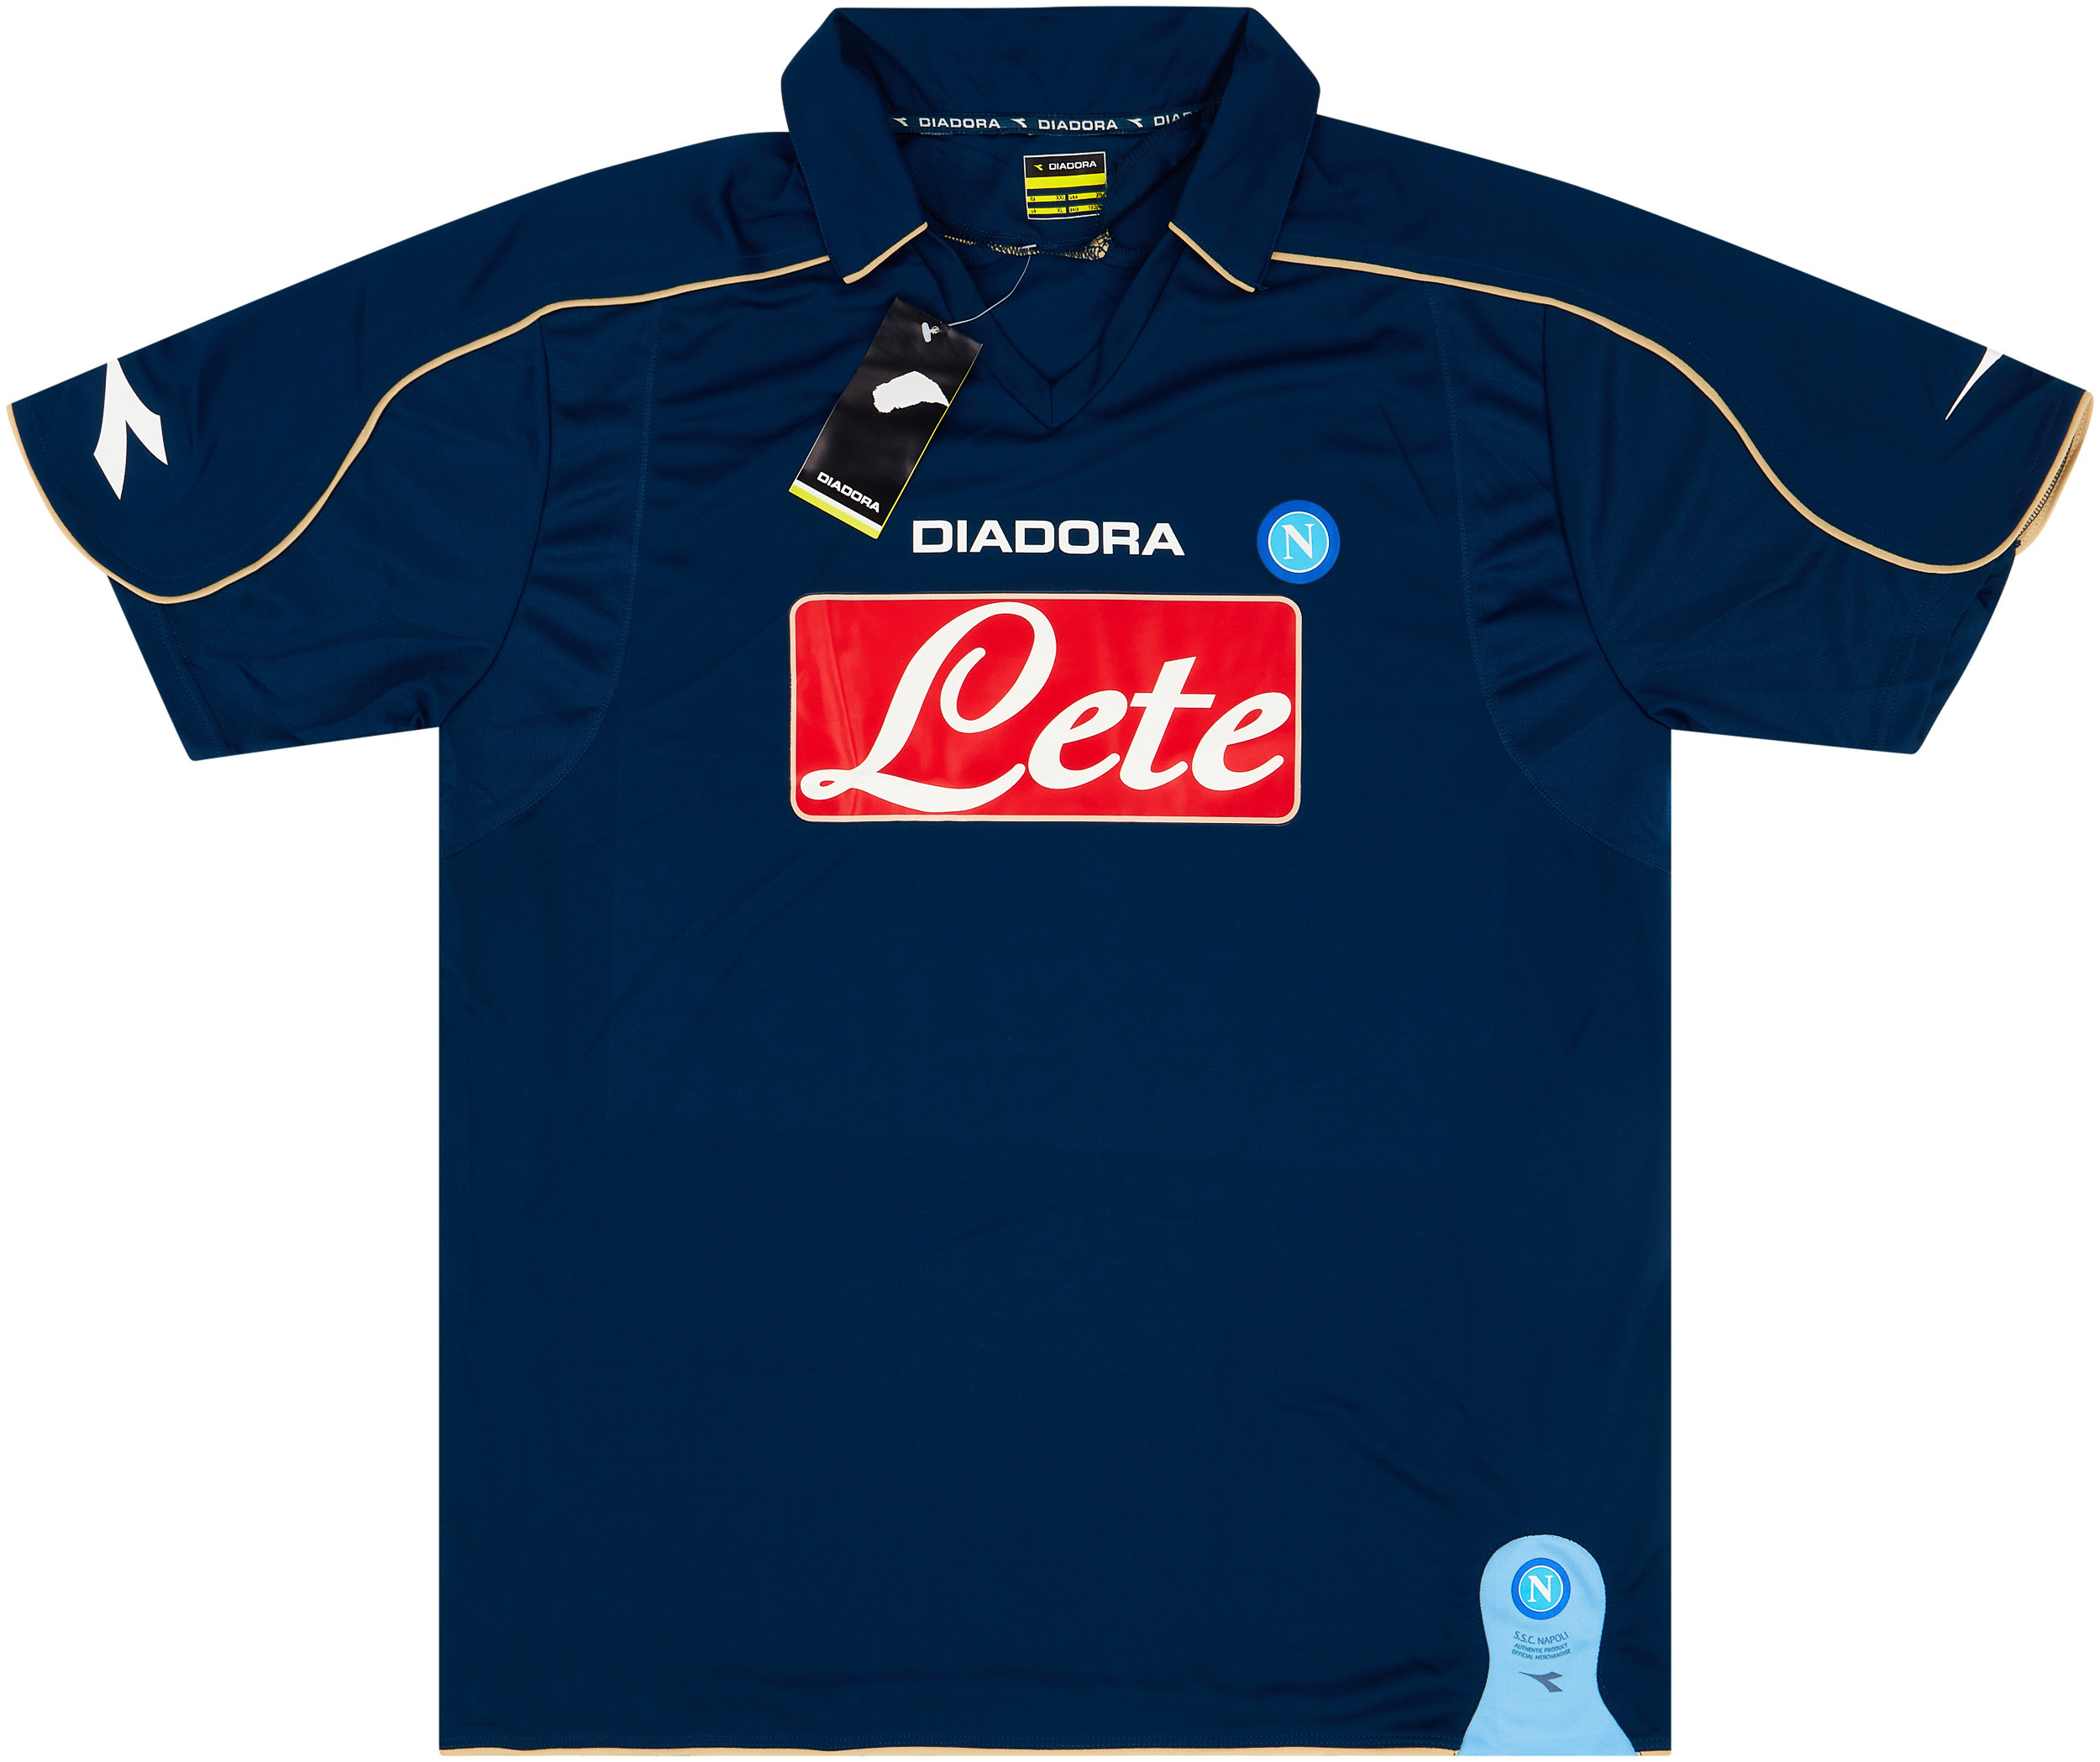 Napoli  Dritte Shirt (Original)